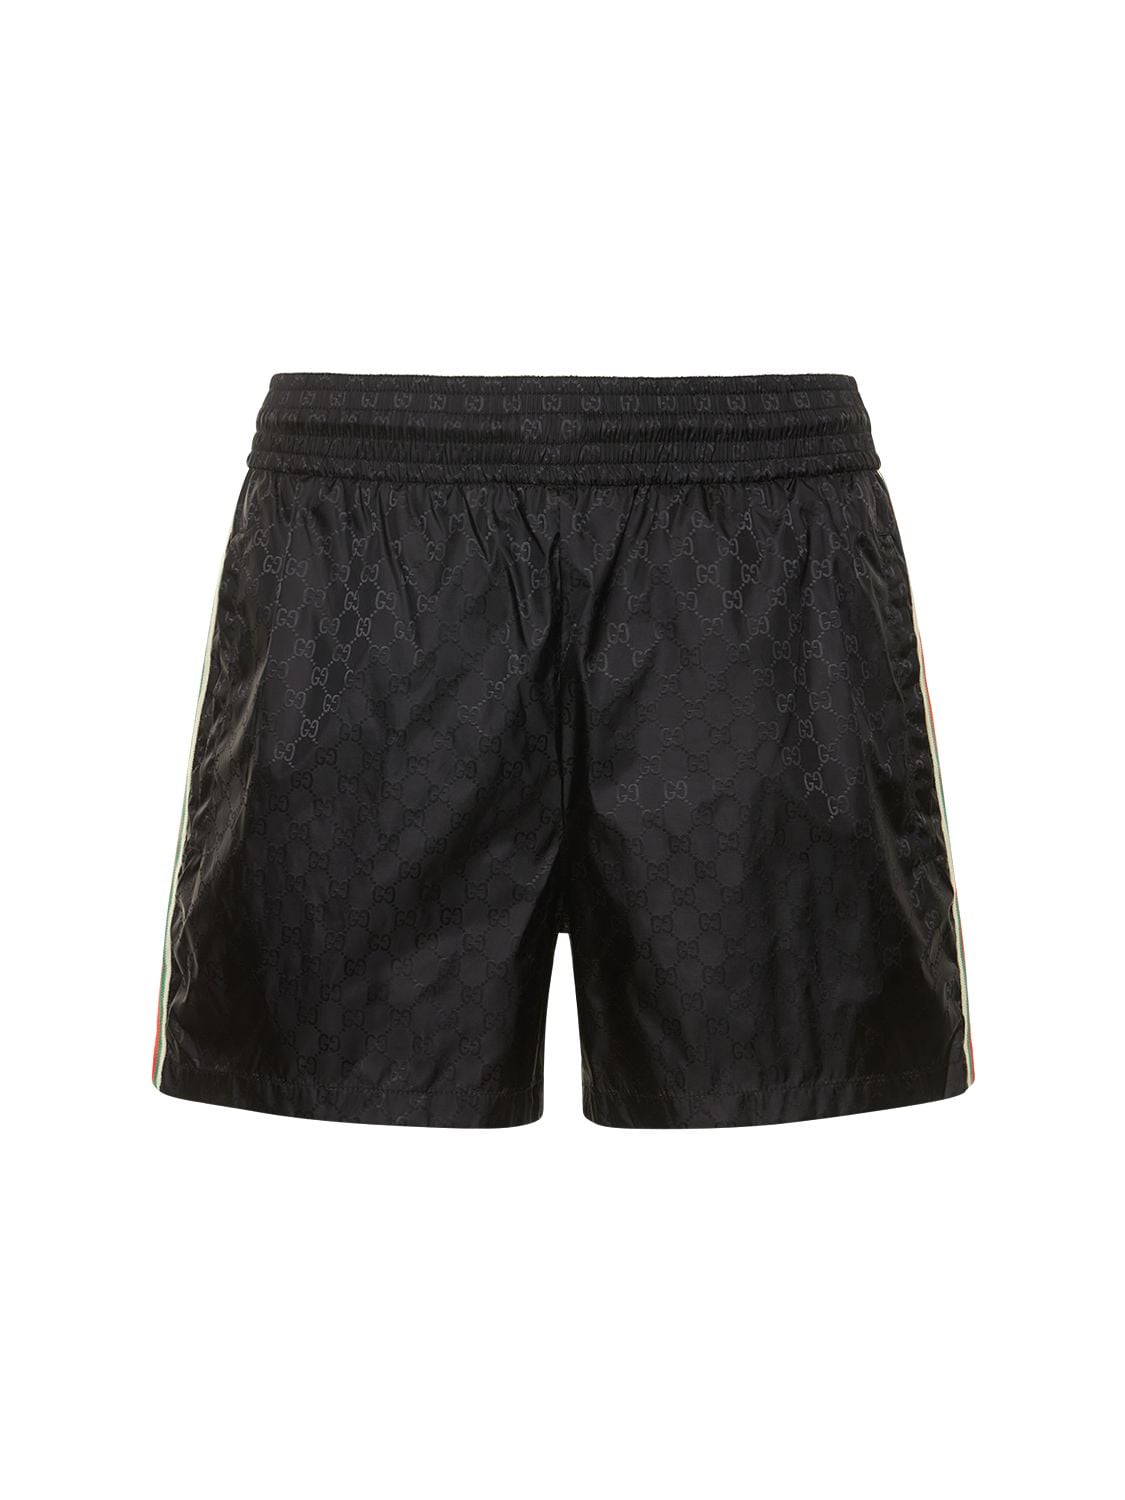 GG jacquard nylon swim shorts in black